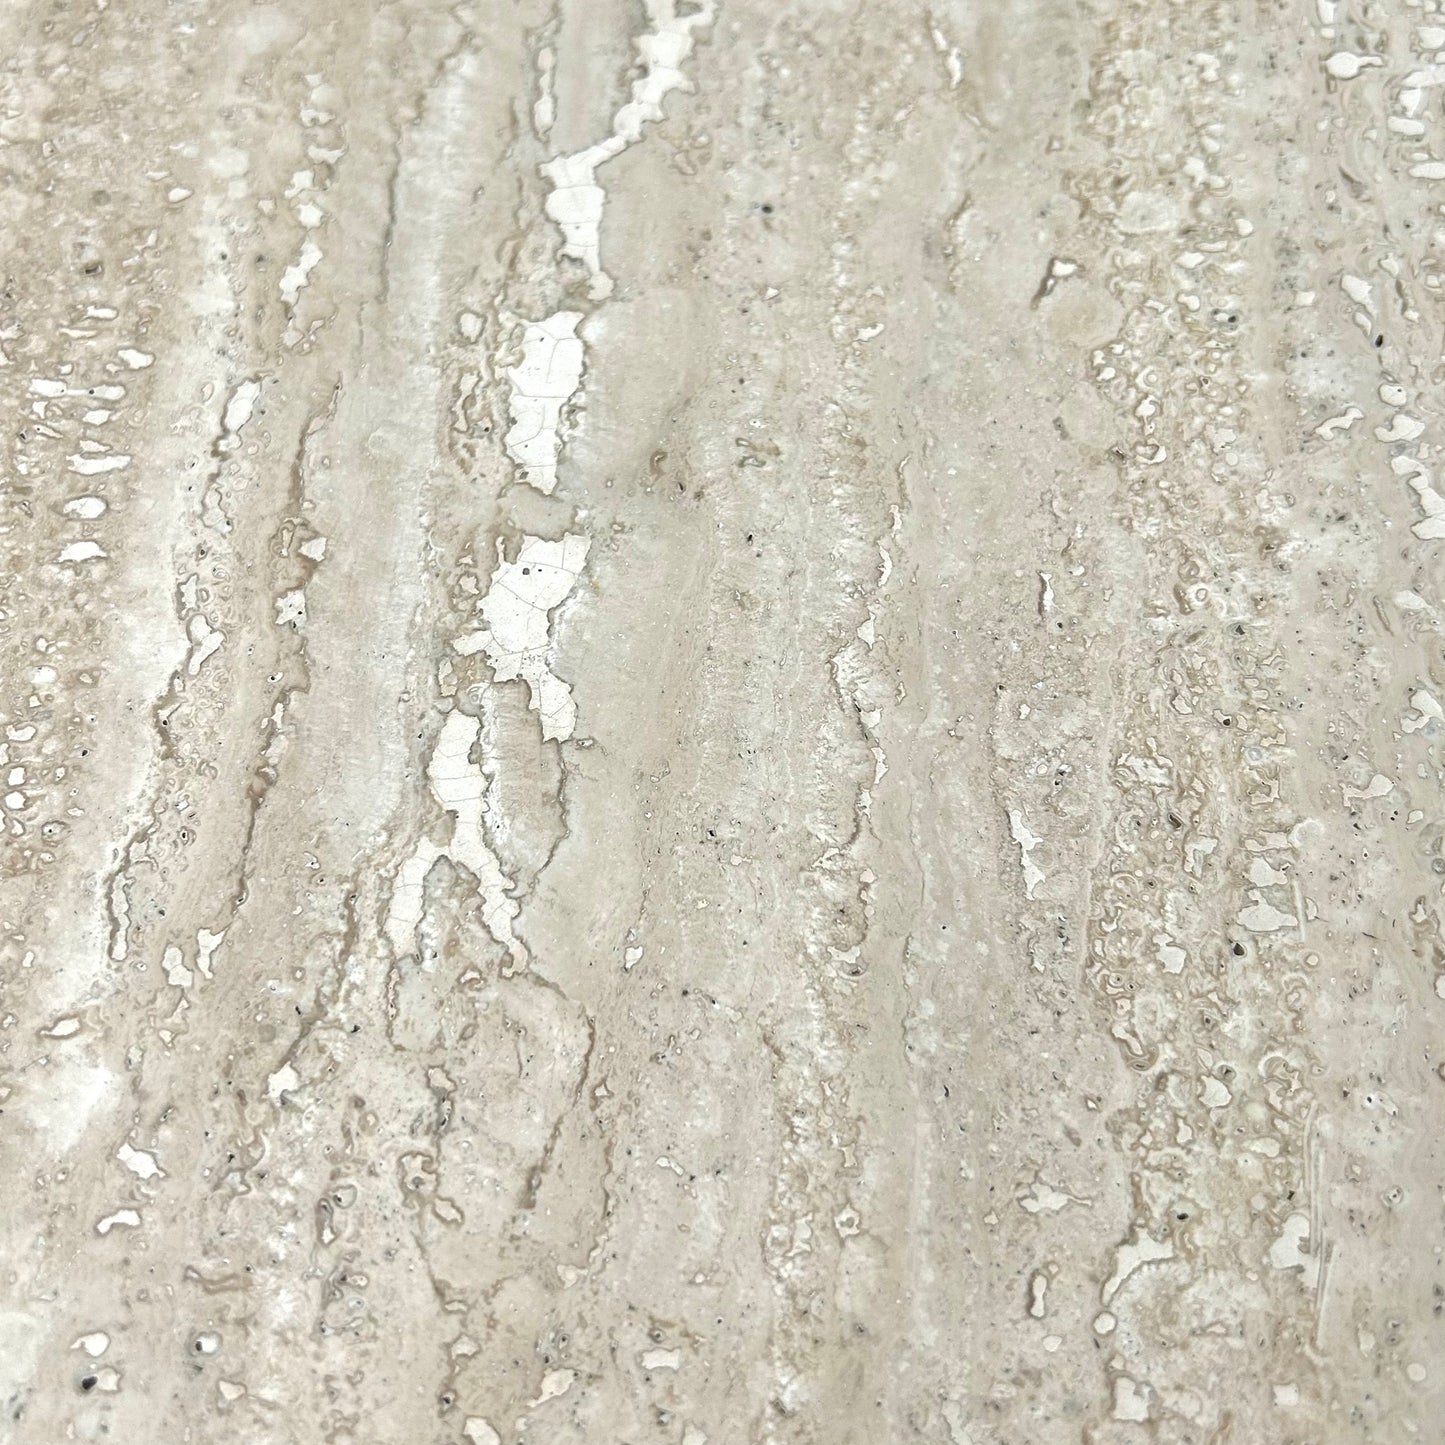 Natural White Travertine Stone Table